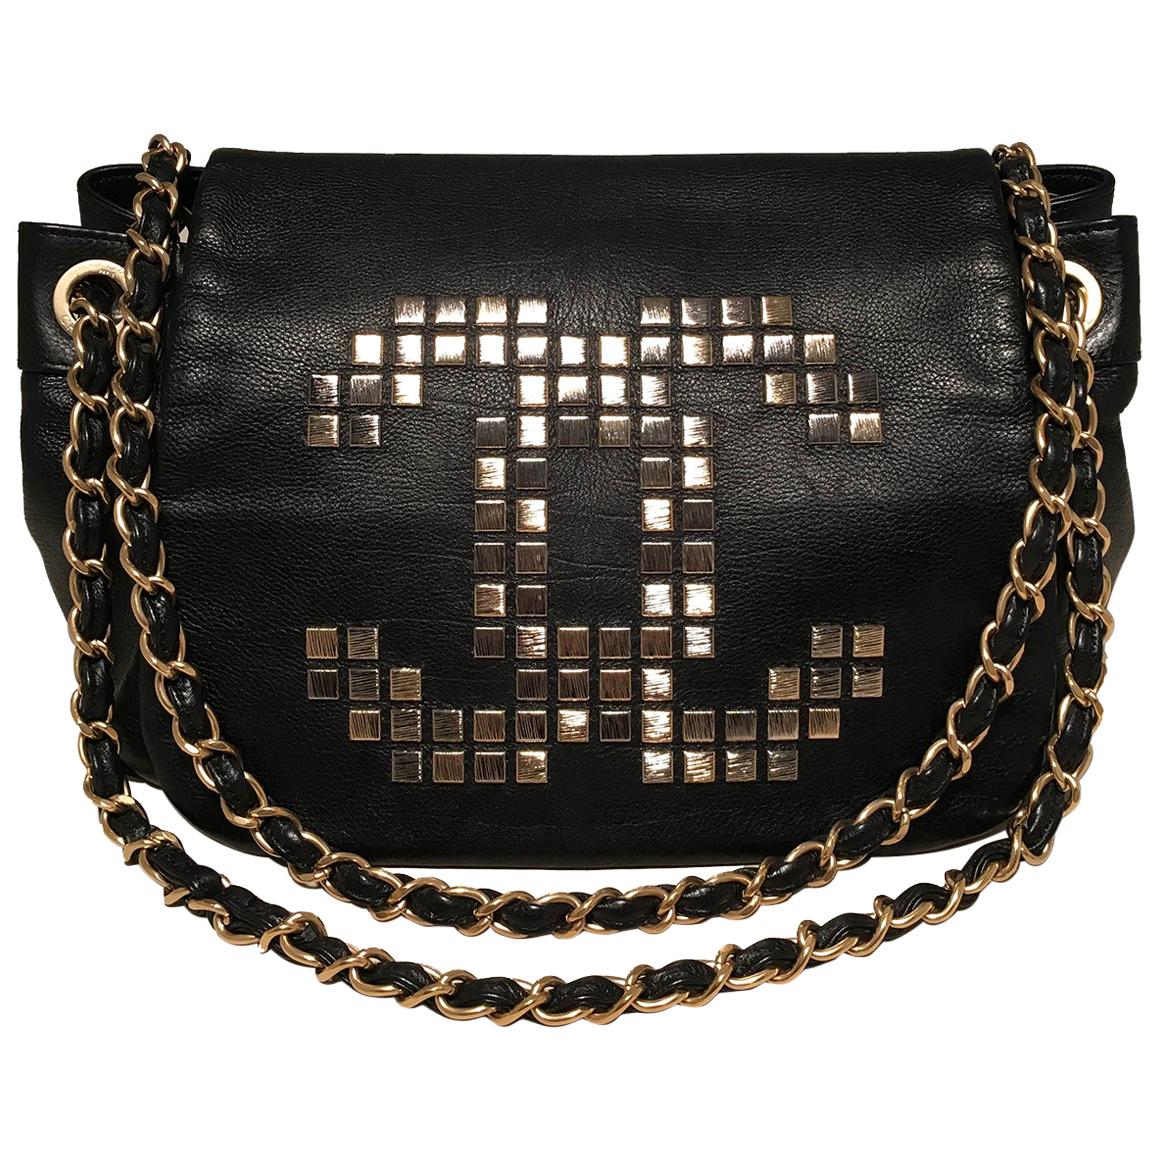 Chanel Black Leather Mosaic Studded Accordion Classic Flap Shoulder Bag